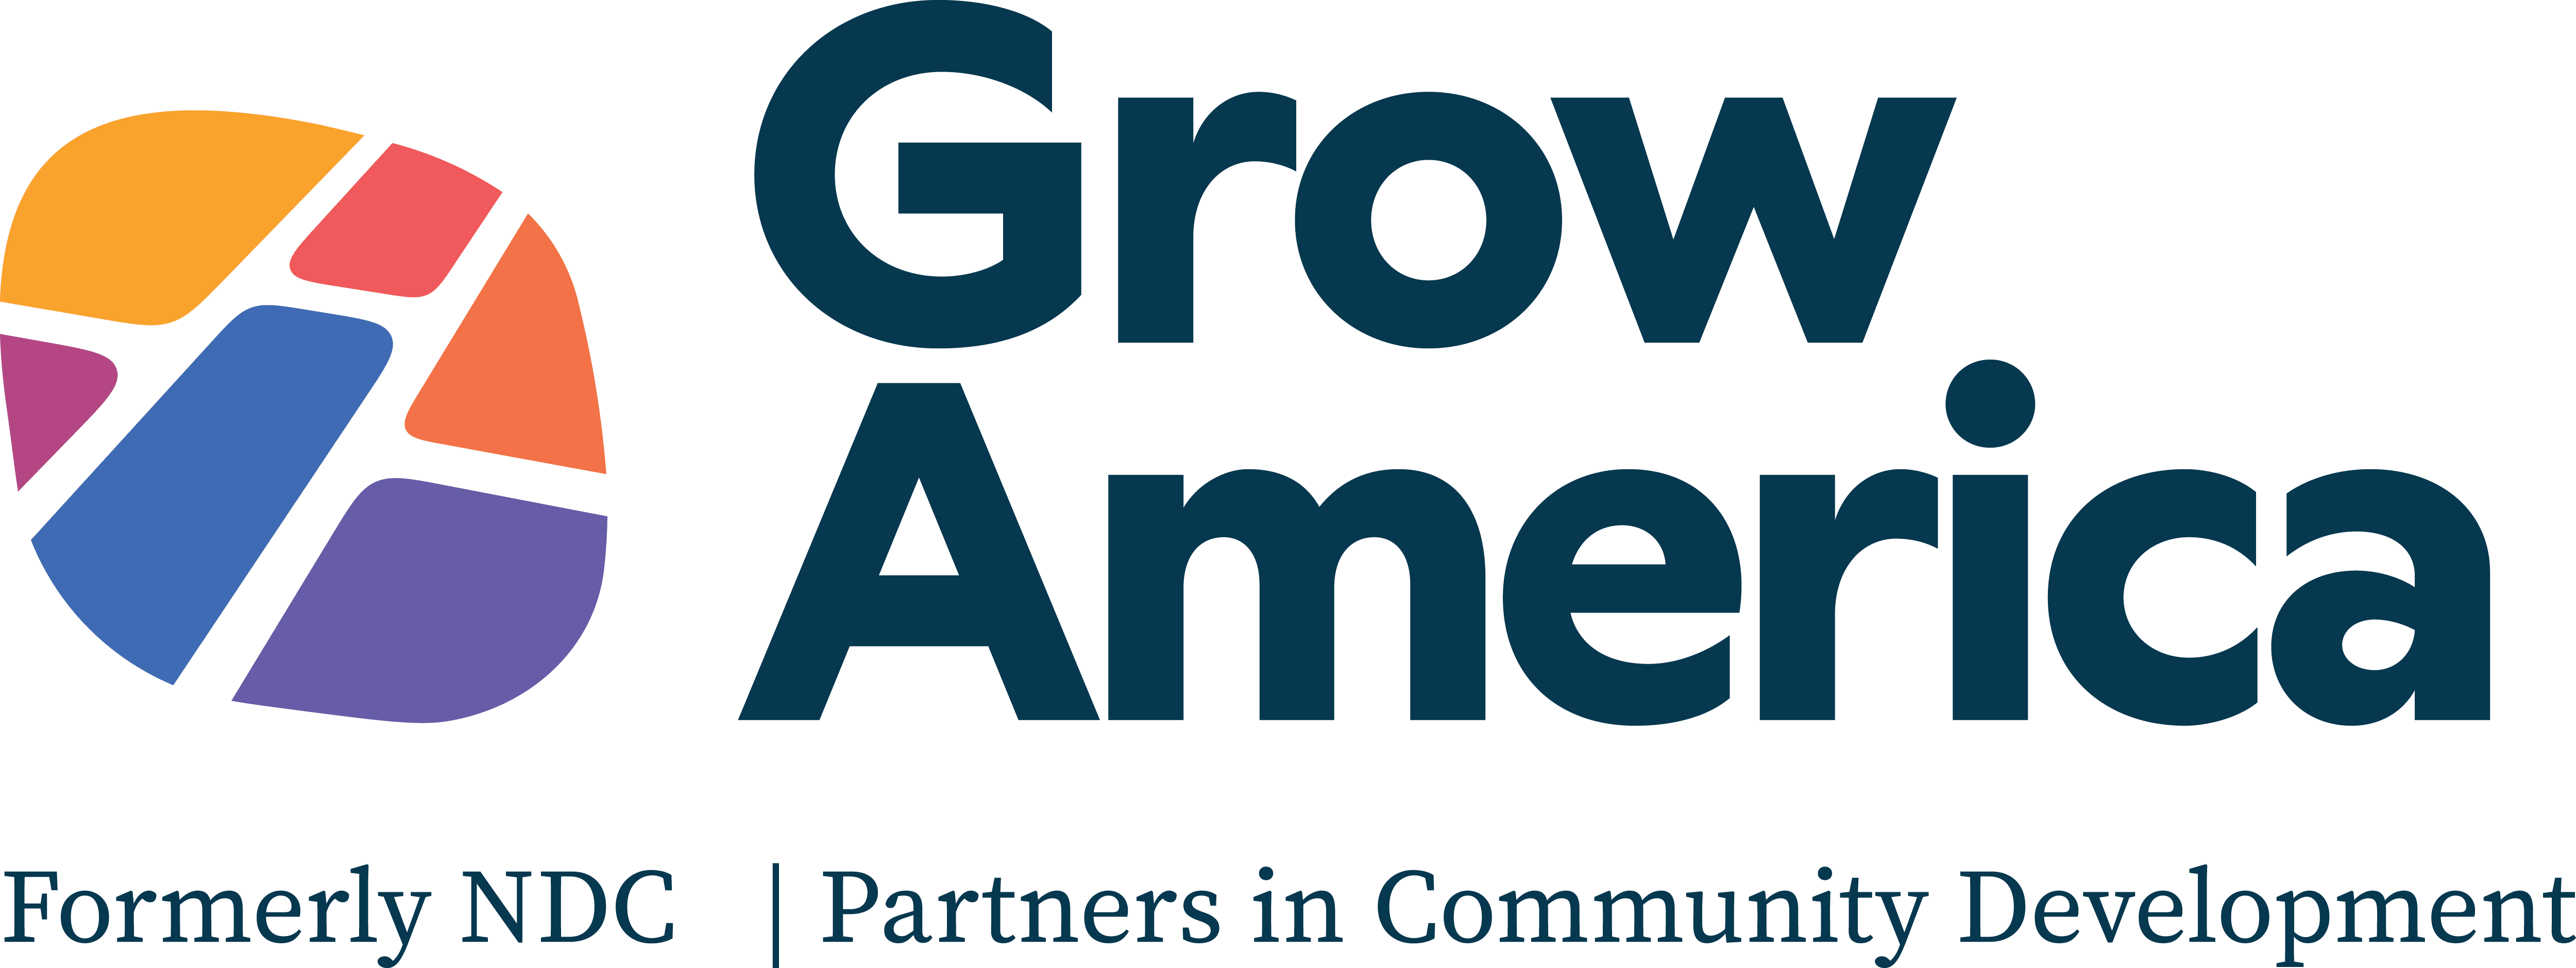 Grow America logo